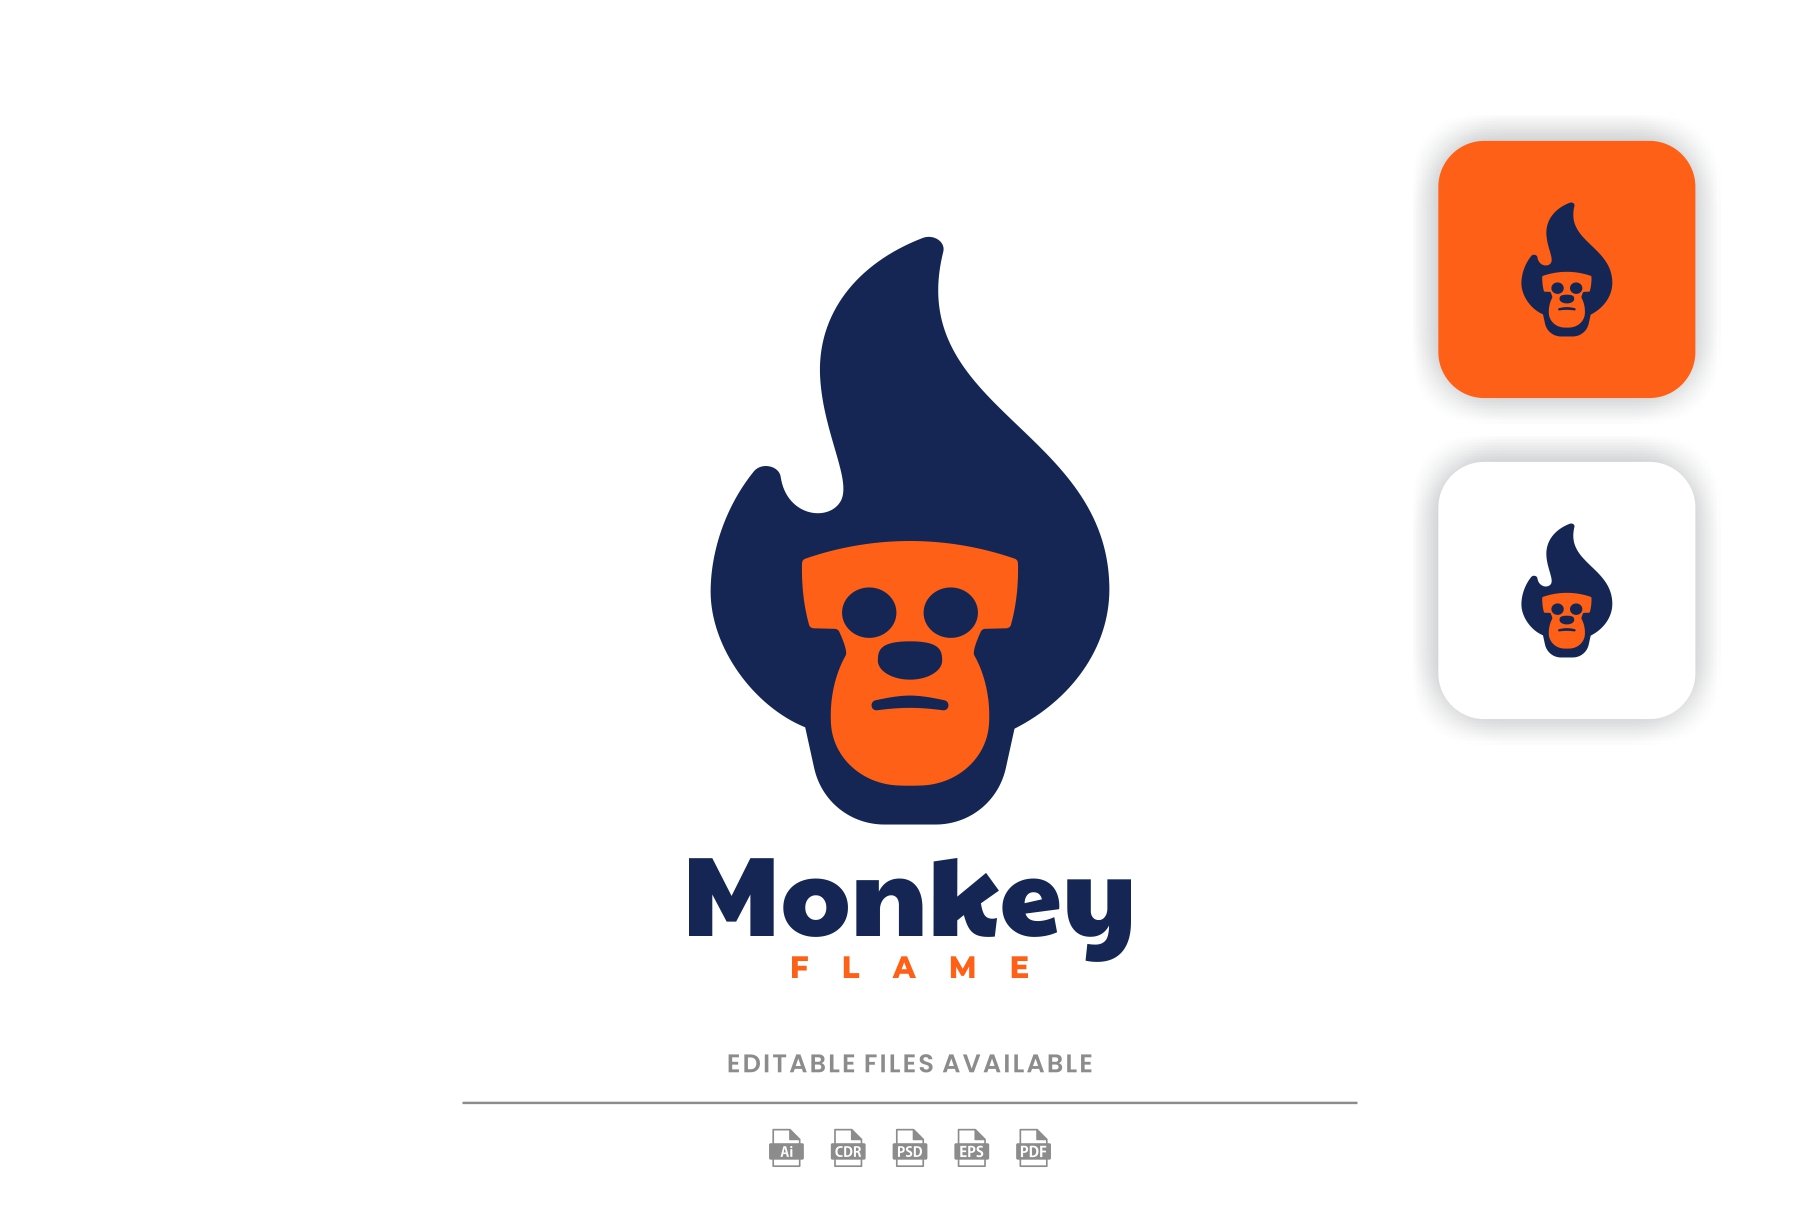 Monkey Simple Mascot Logo cover image.